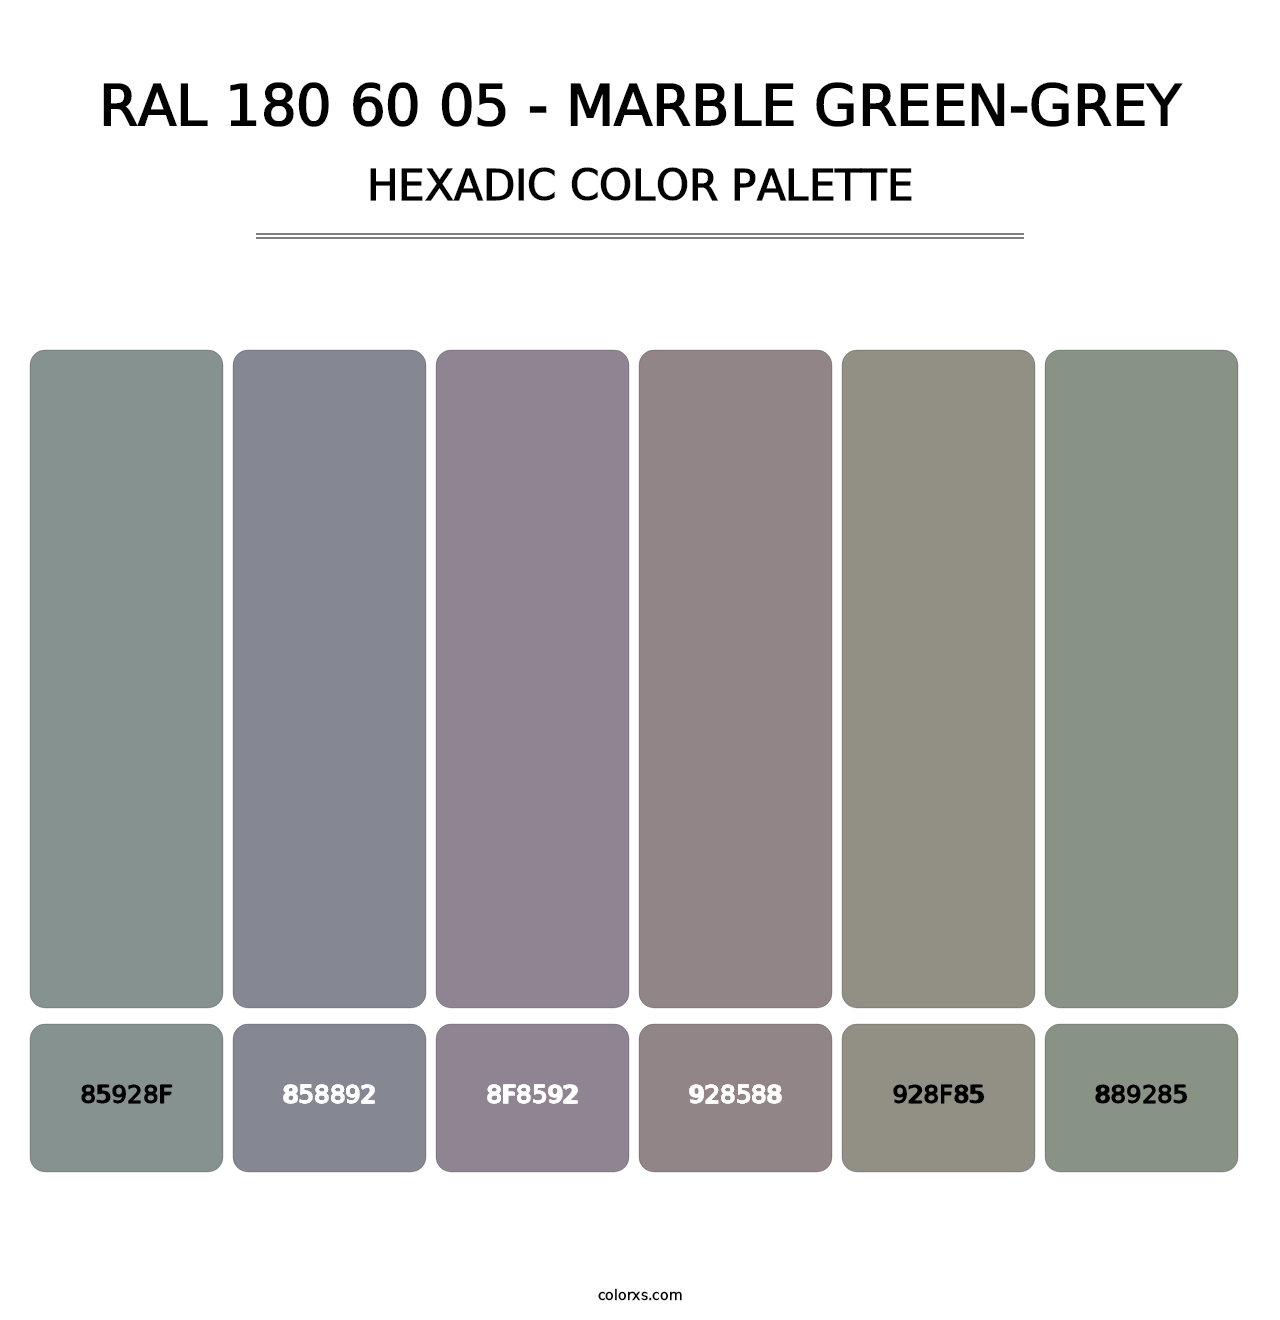 RAL 180 60 05 - Marble Green-Grey - Hexadic Color Palette